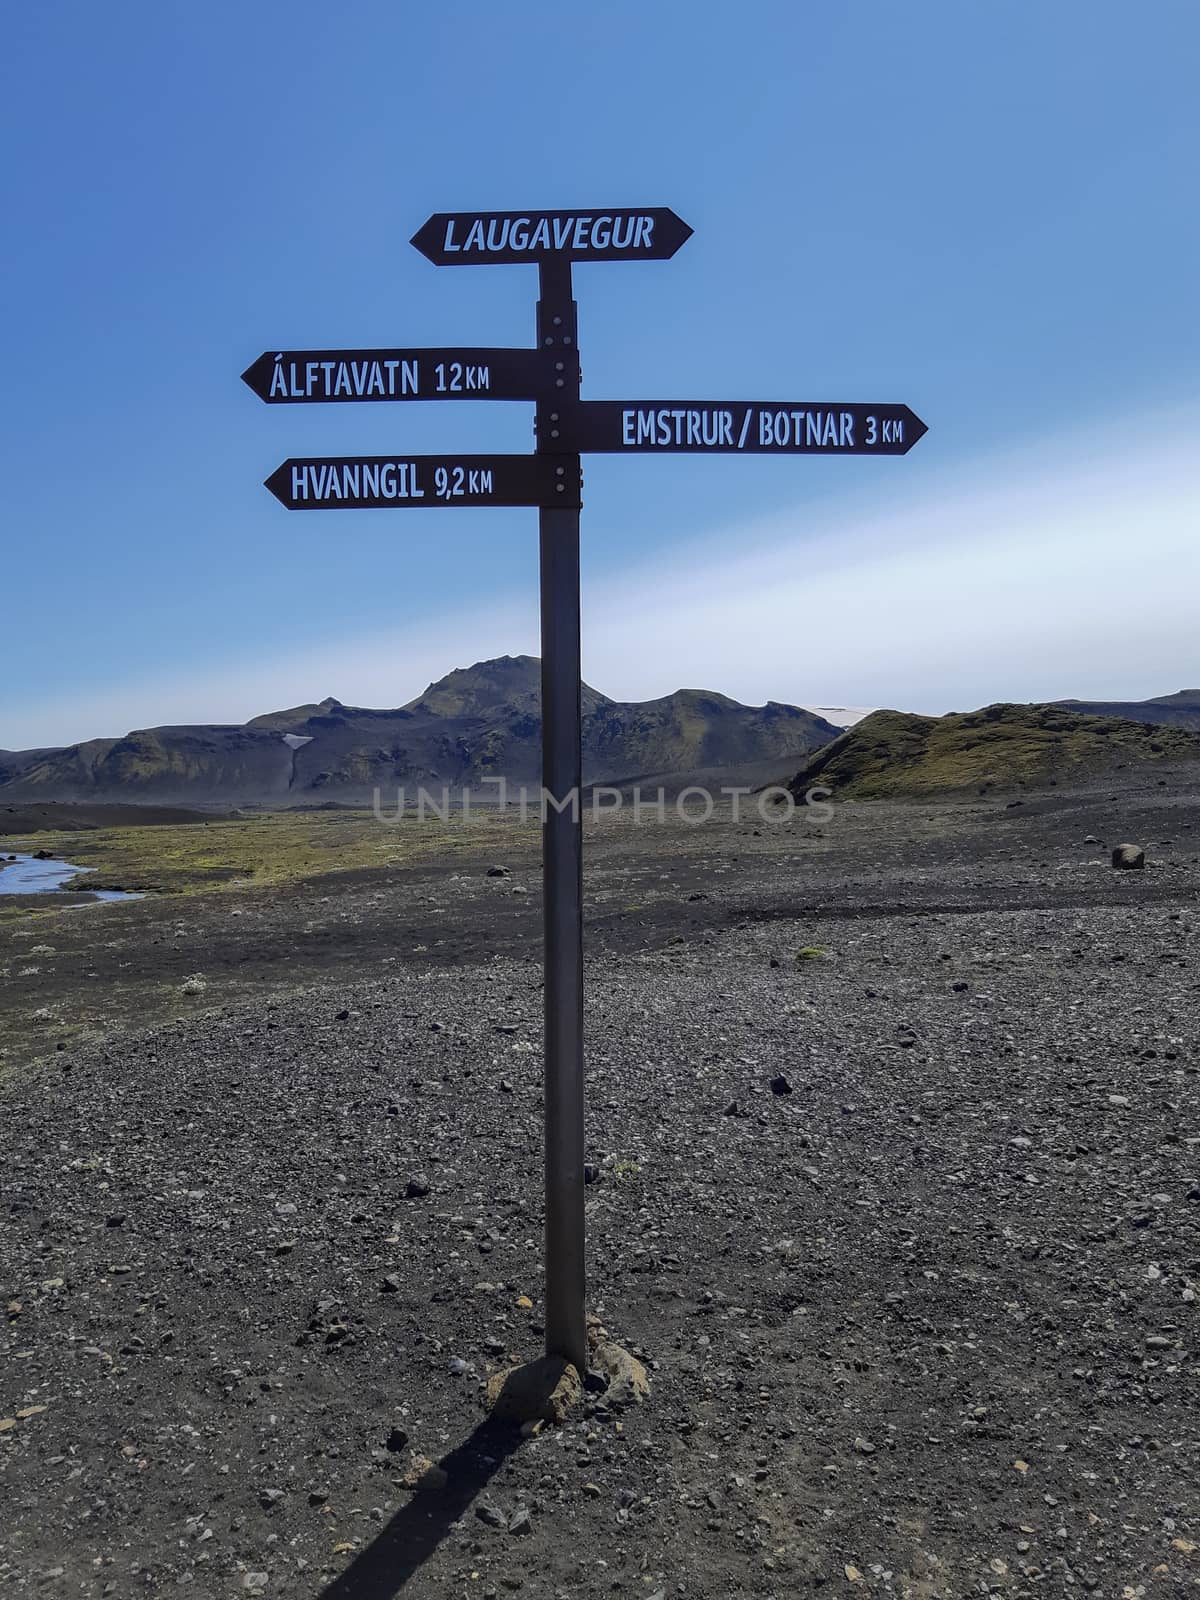 directional sign on the Laugavegur hiking trail, signalling, Laugavegur, Botnar, Emstrur Hvanngil by kb79